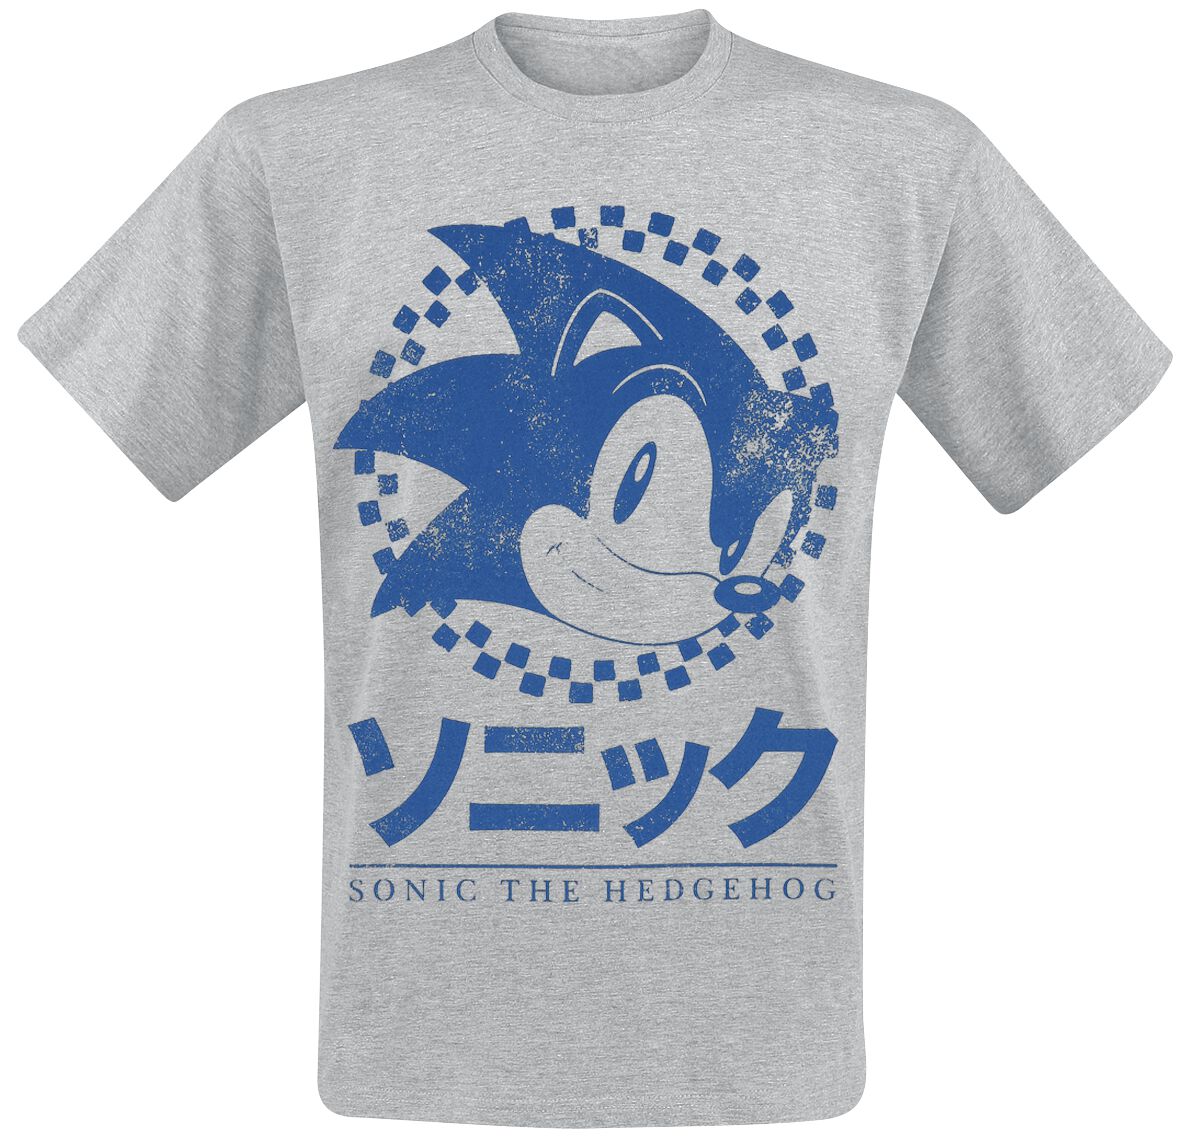 Sonic The Hedgehog Japanese T-Shirt mottled grey